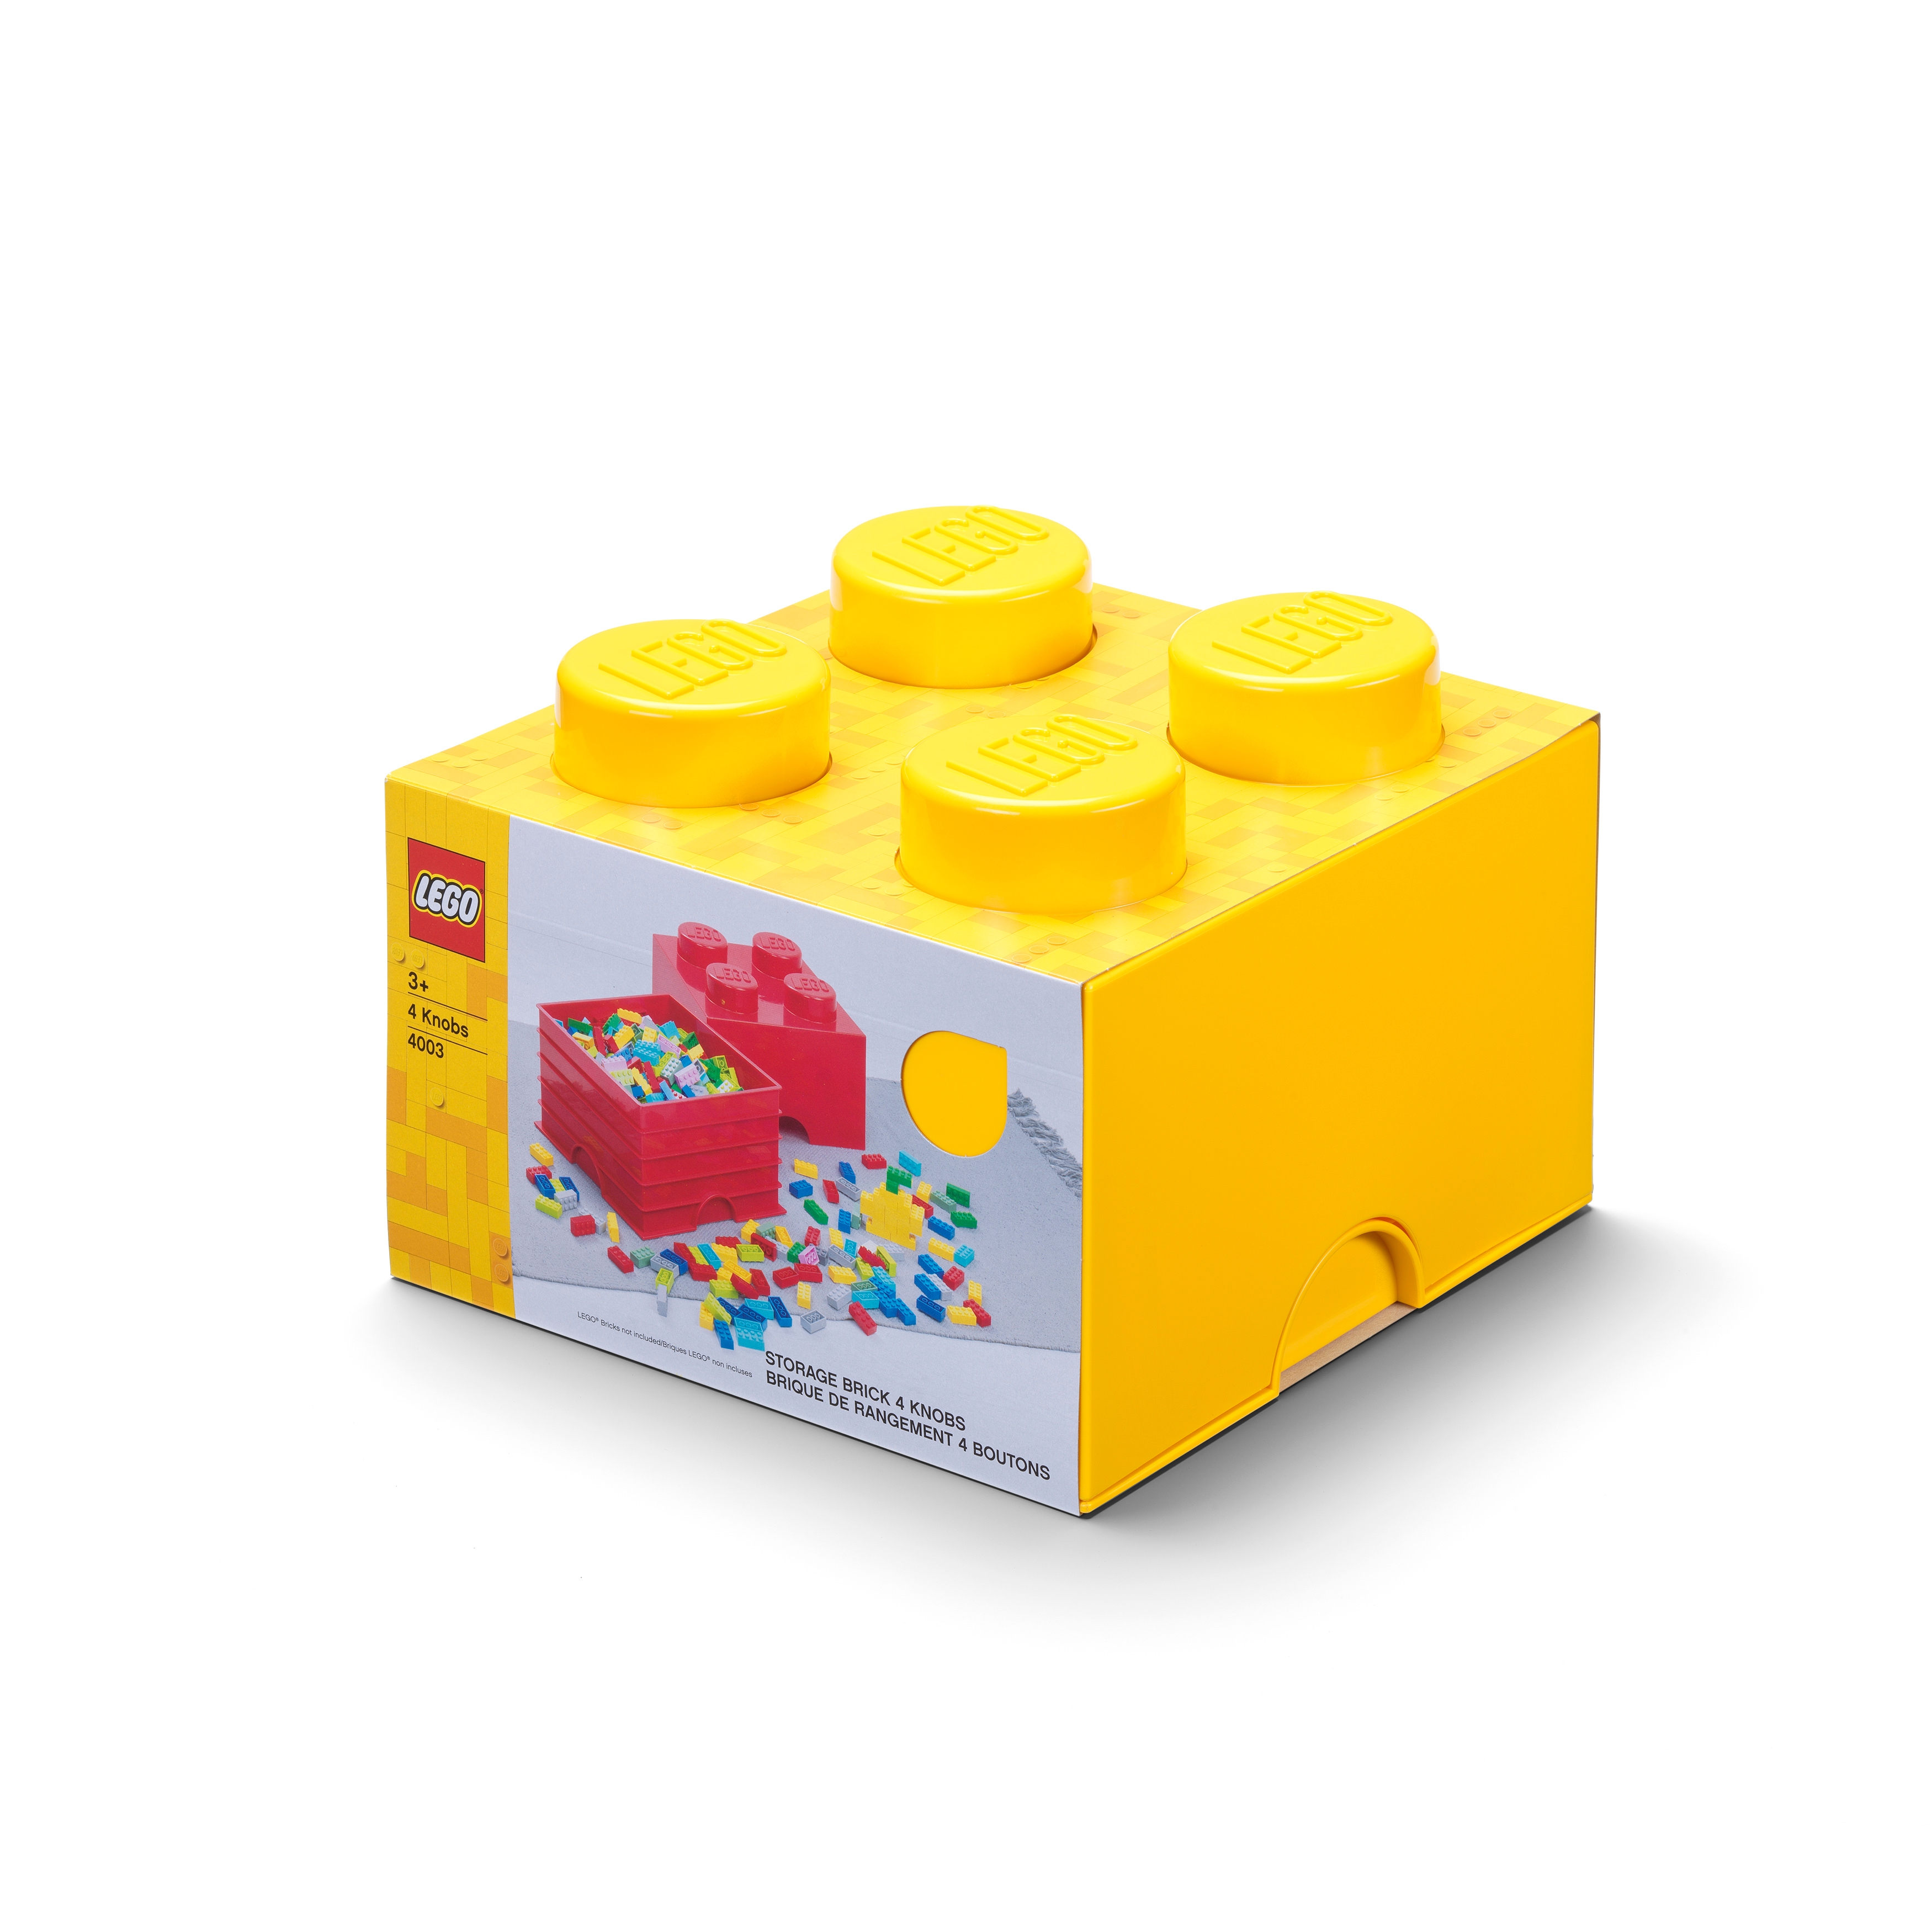 Making a Custom Lego Brick Storage Container 